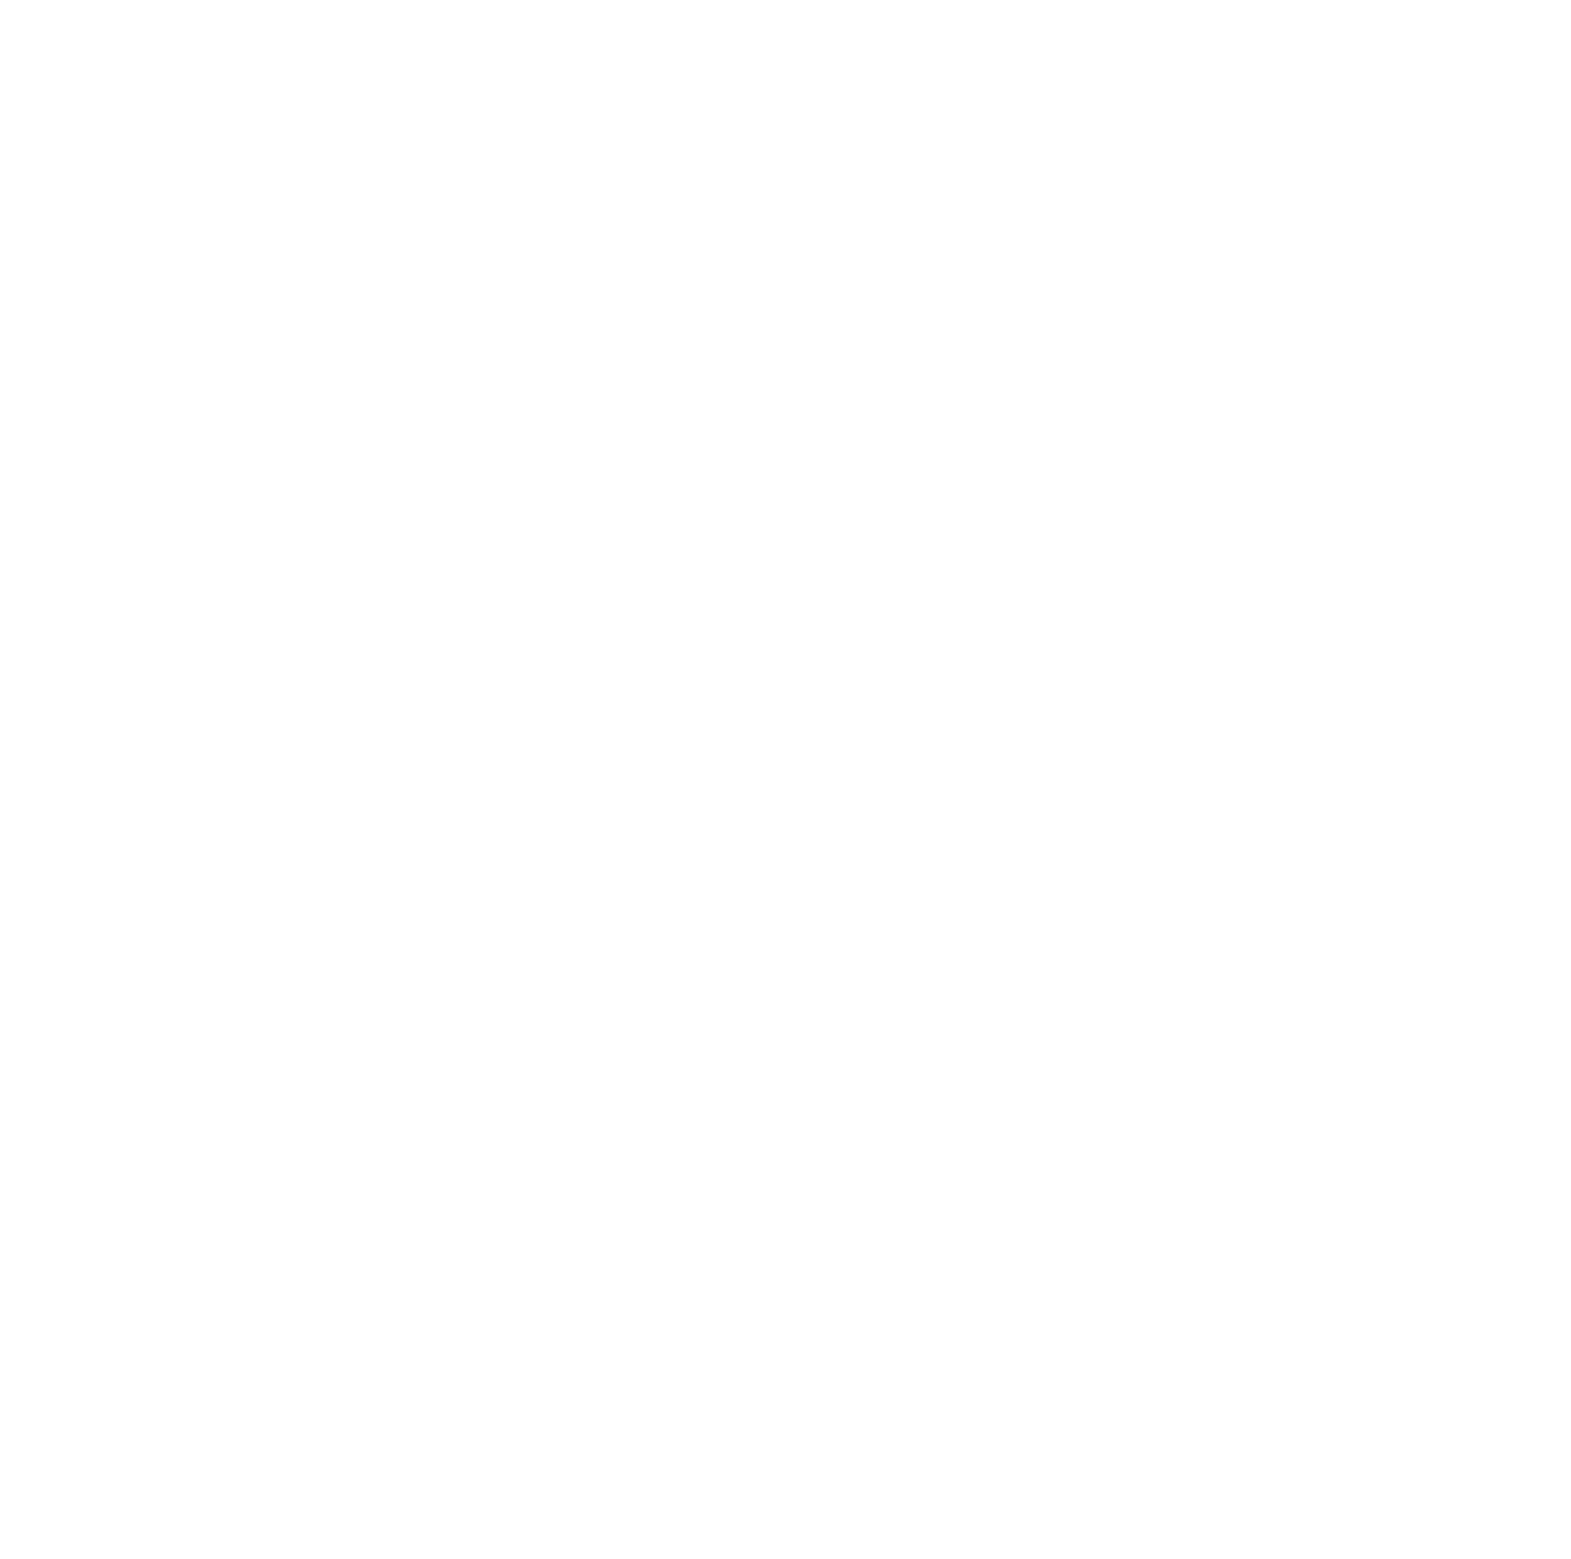 Kornit Digital logo pour fonds sombres (PNG transparent)